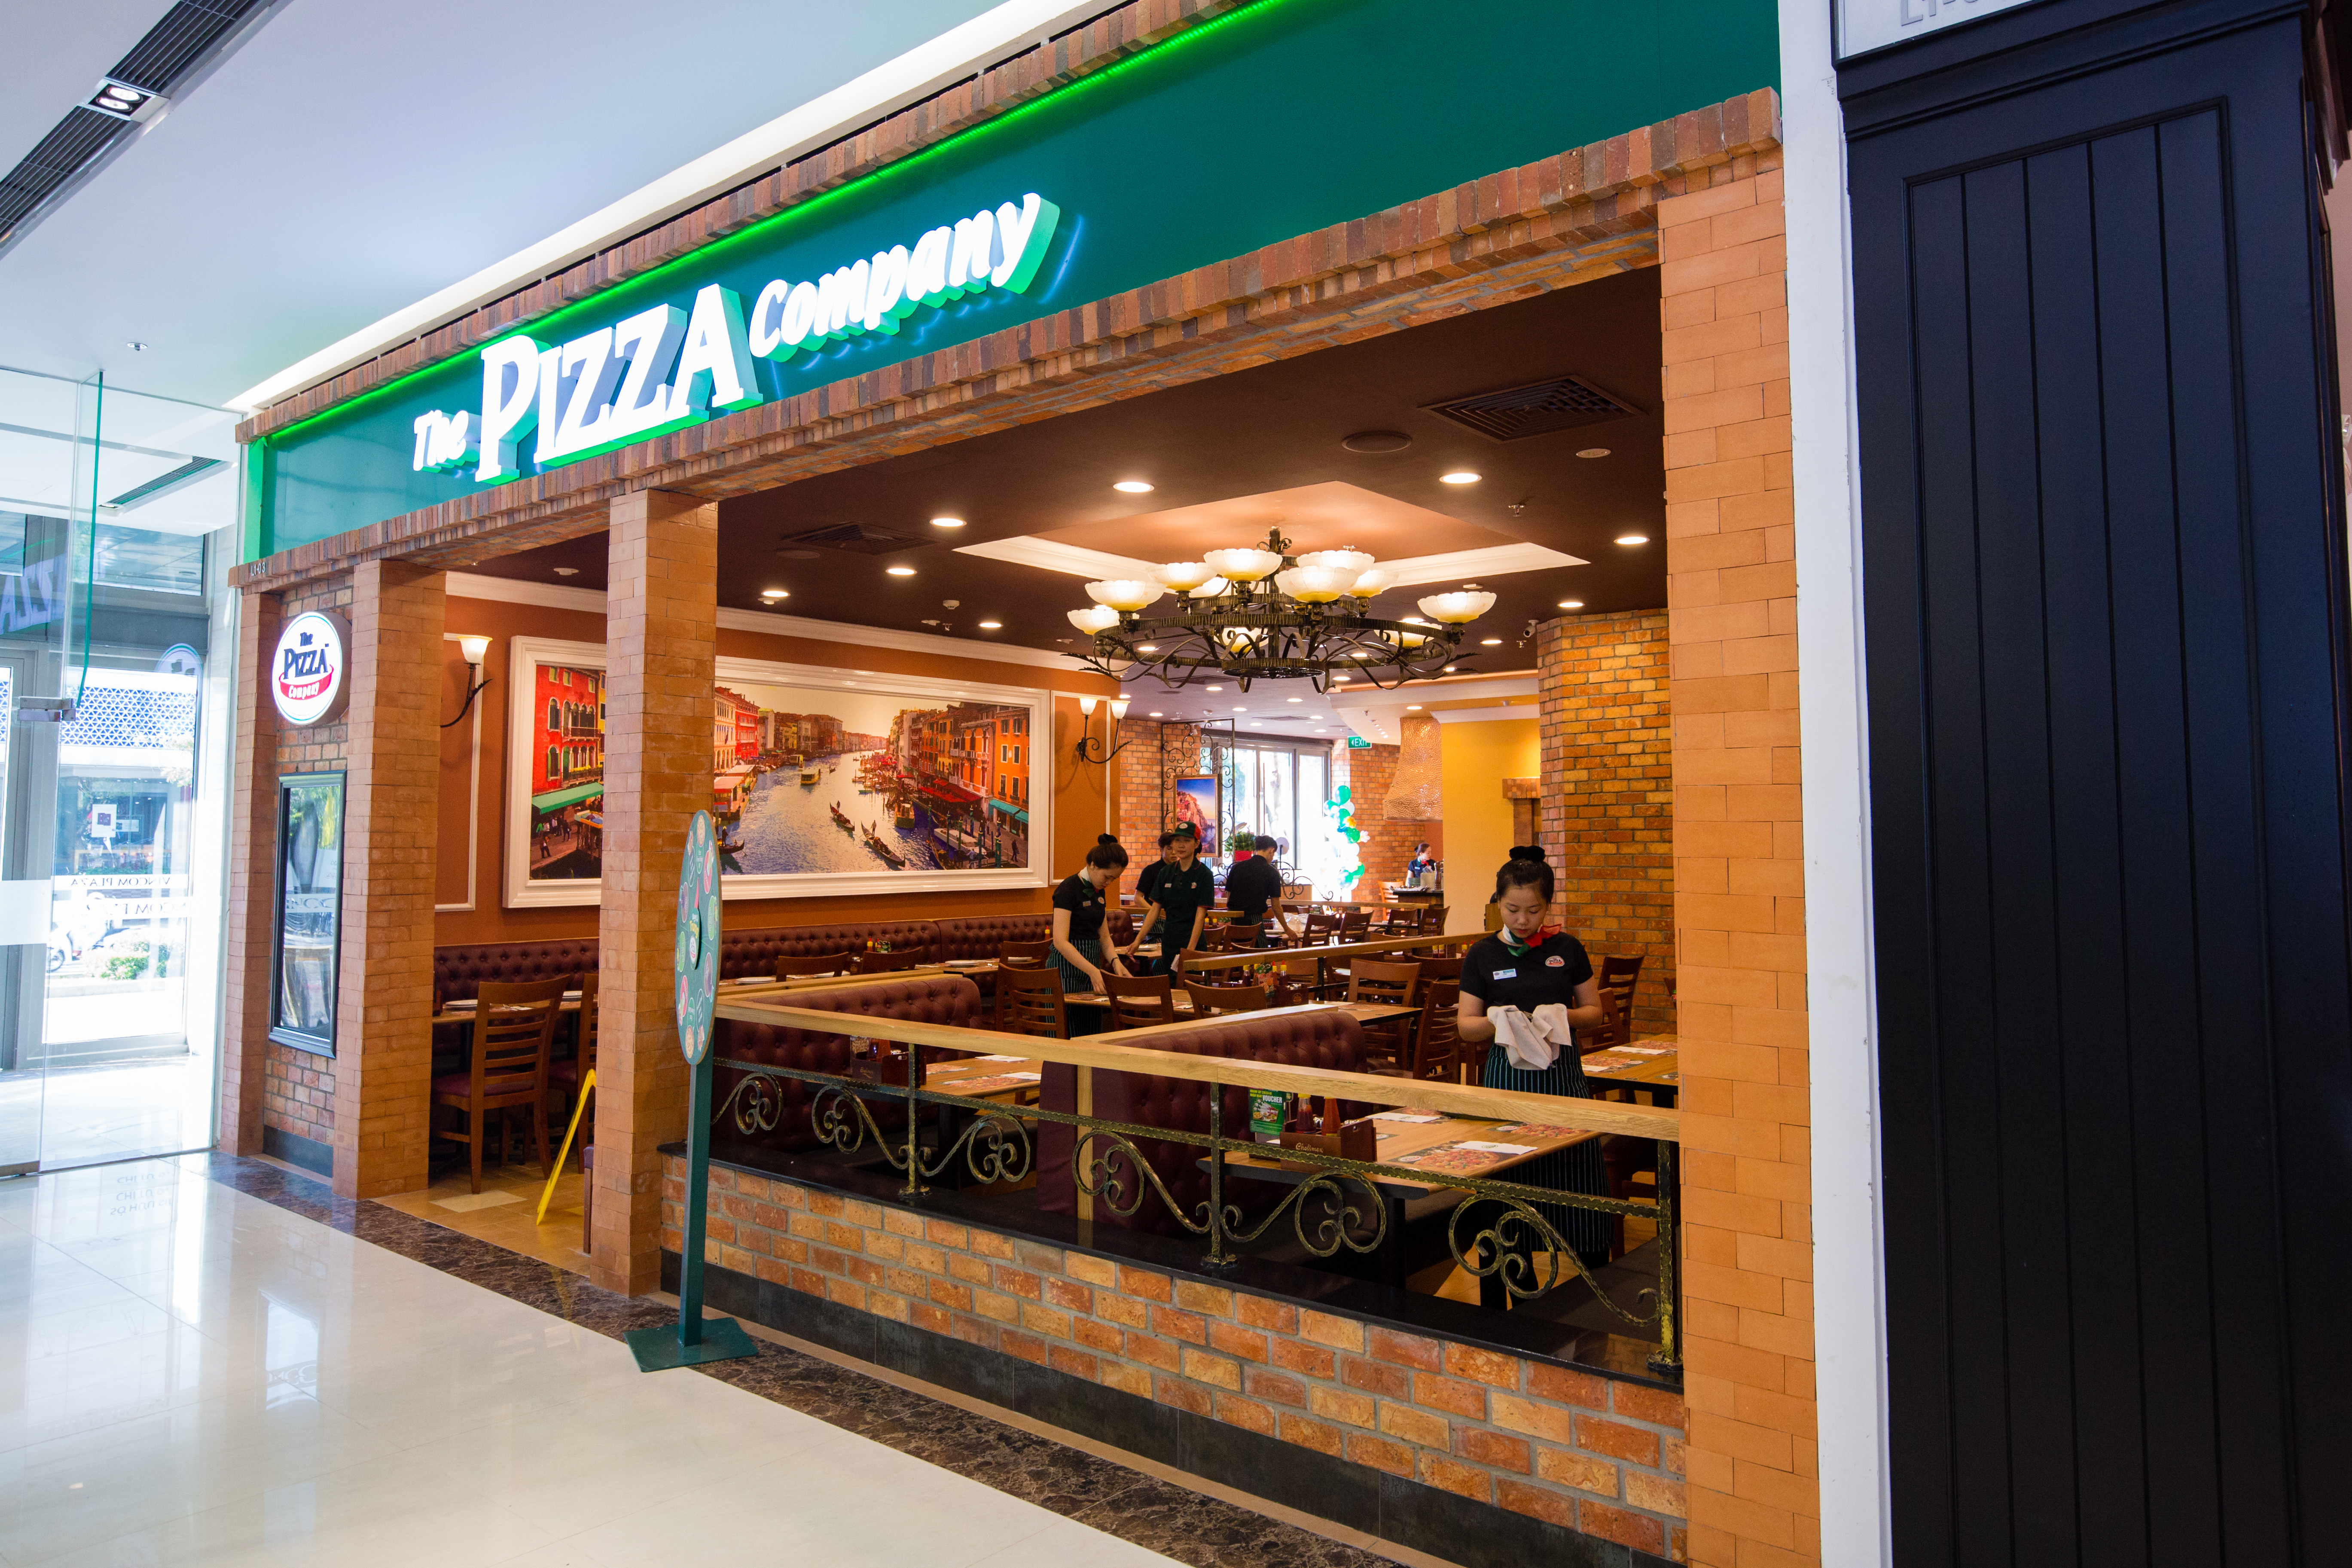 Cửa hàng The Pizza Company có mặt tại Vincom Plaza Huế 